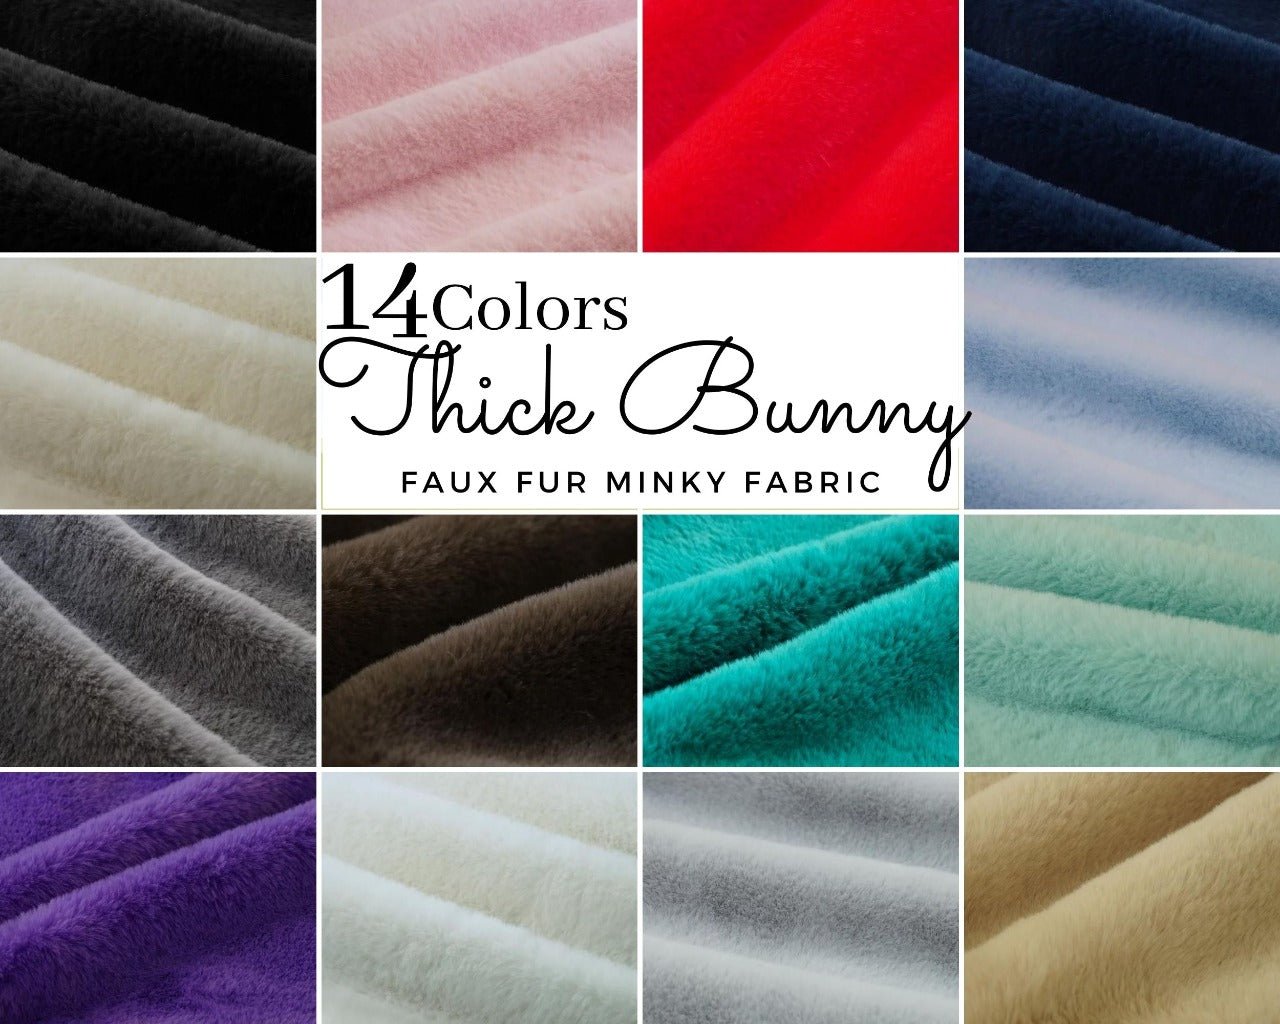 Bunny Thick Faux Fur Minky Fabric / Short Pile / Super Soft